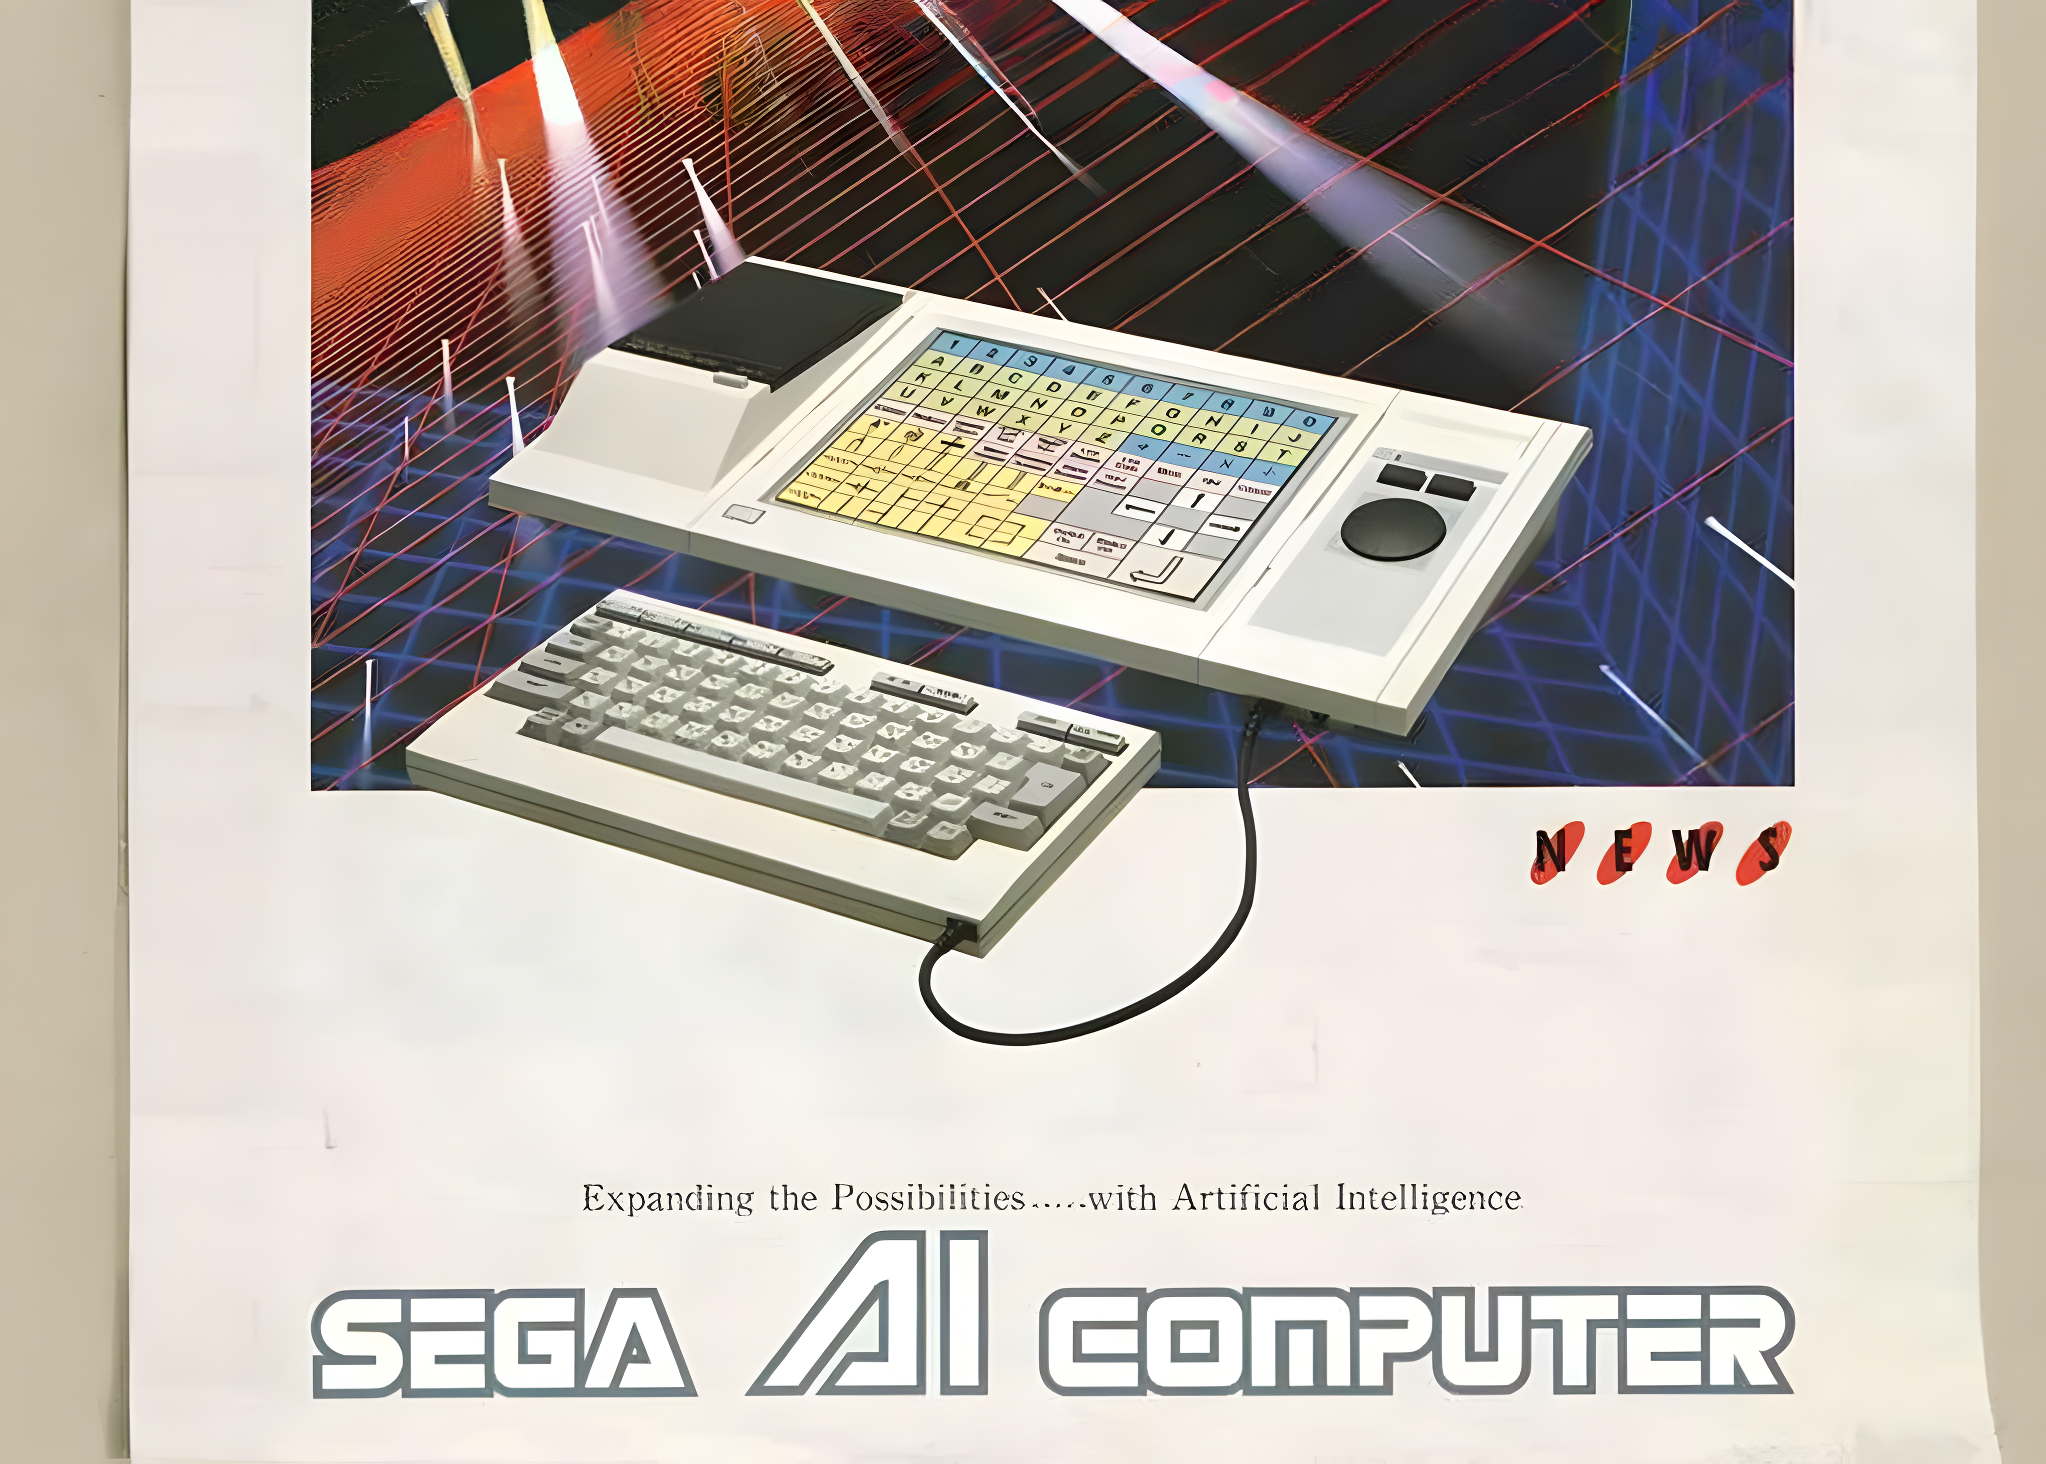 Sega AI Computer advertisement, upscaled